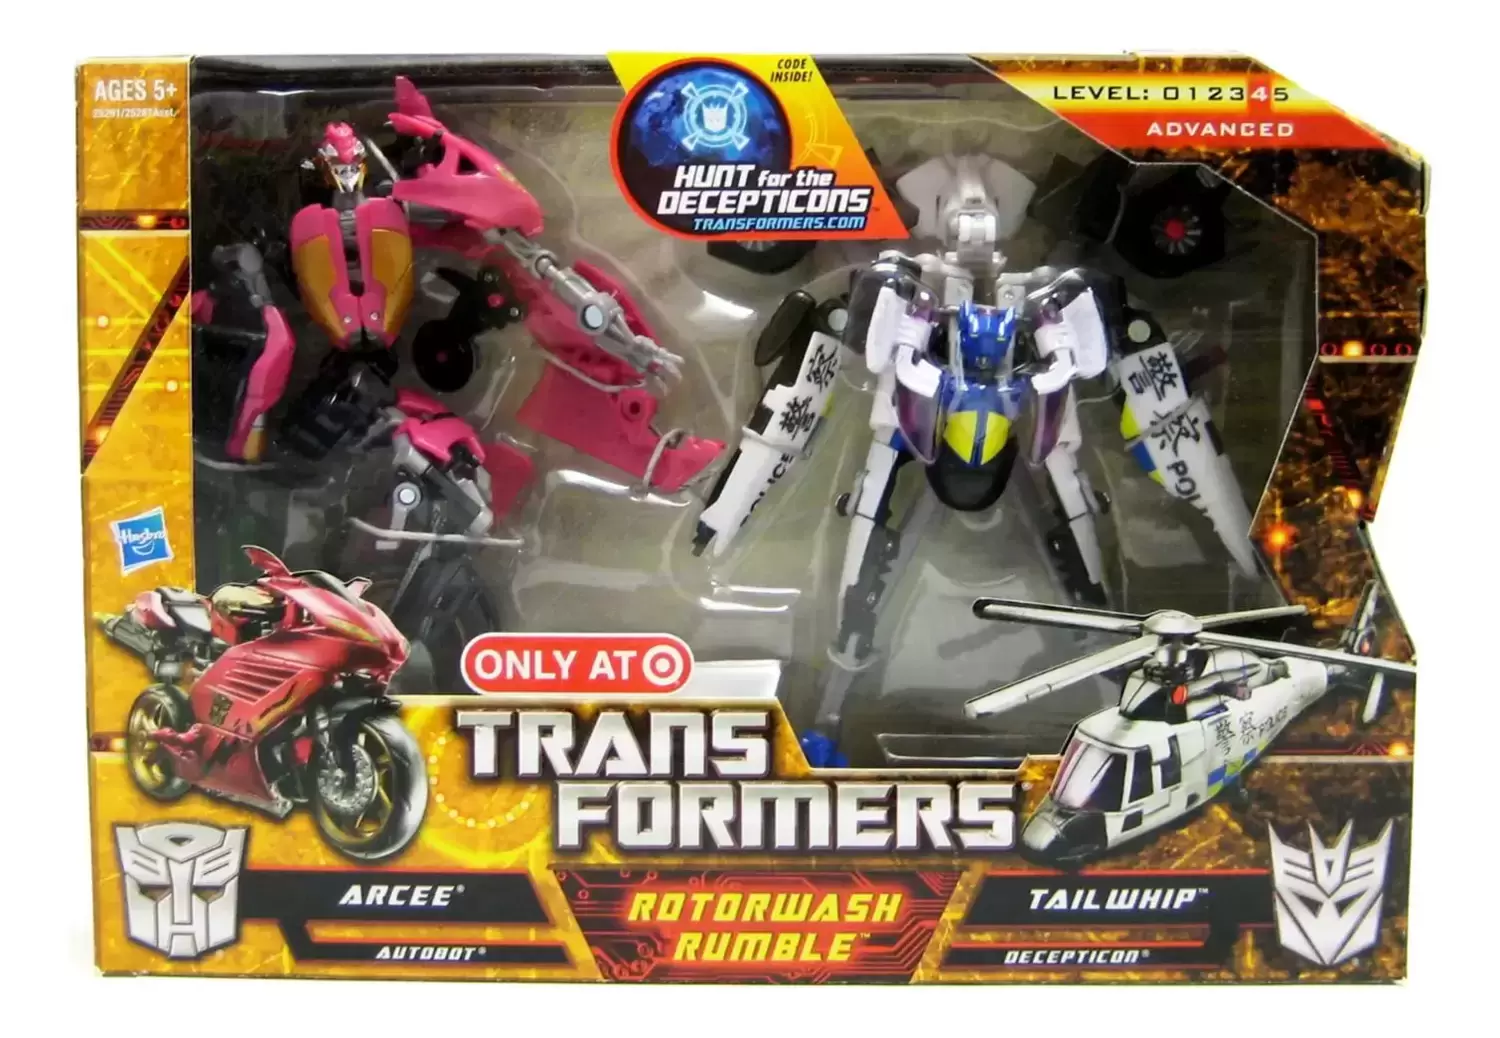 Versus Pack: Rotorwash Rumble (Arcee vs Tailwhip) - Transformers